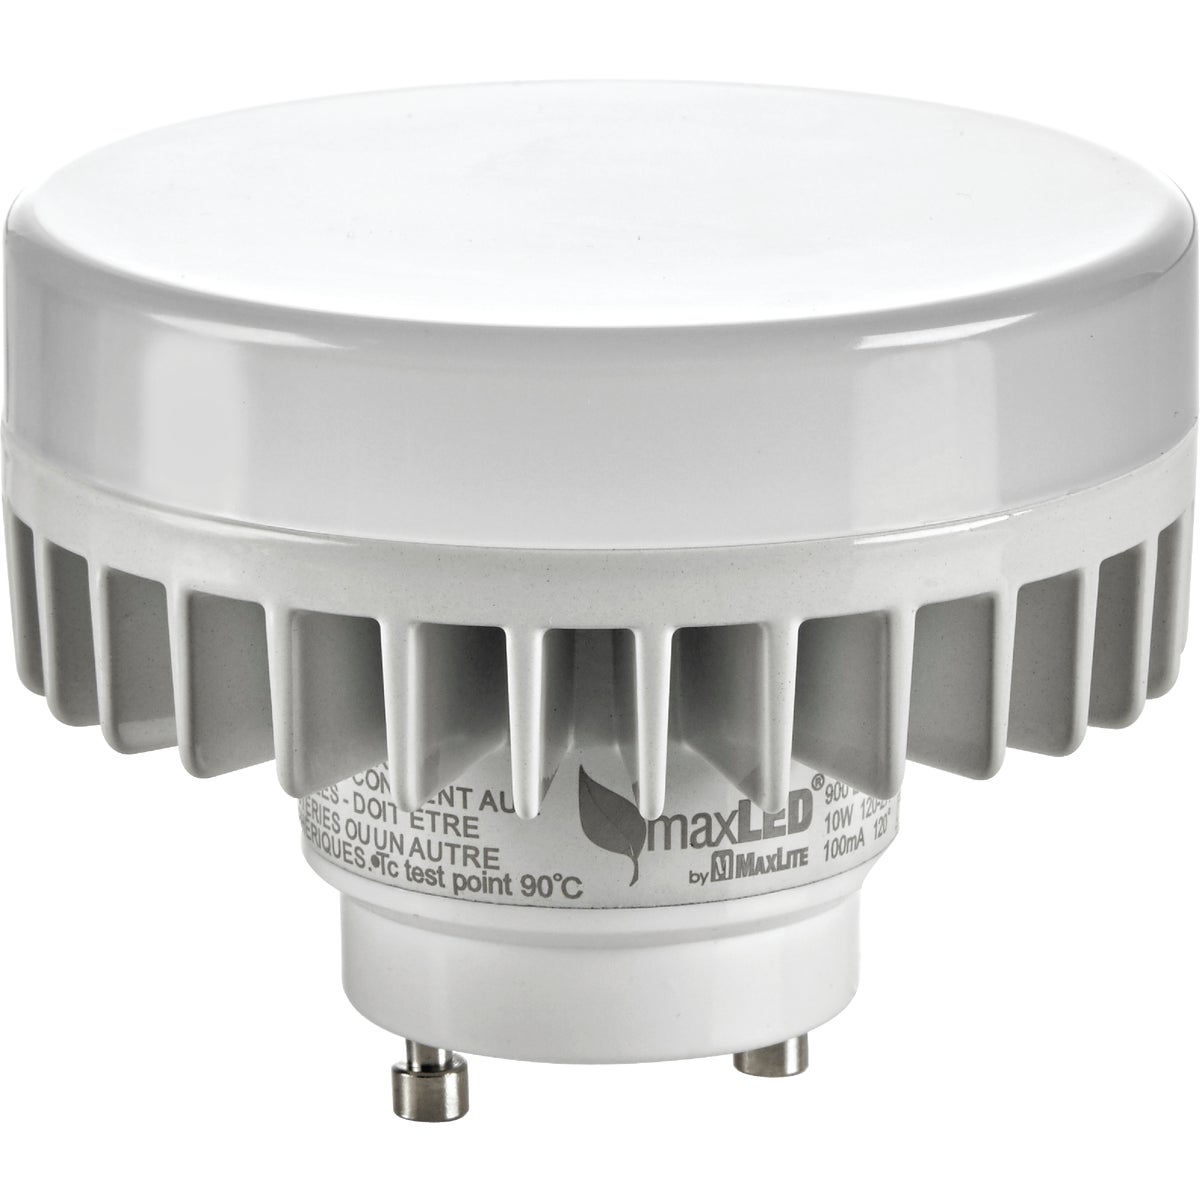 Item 502238, GU24 squat base, LED (light emitting diode) replacement bulb.